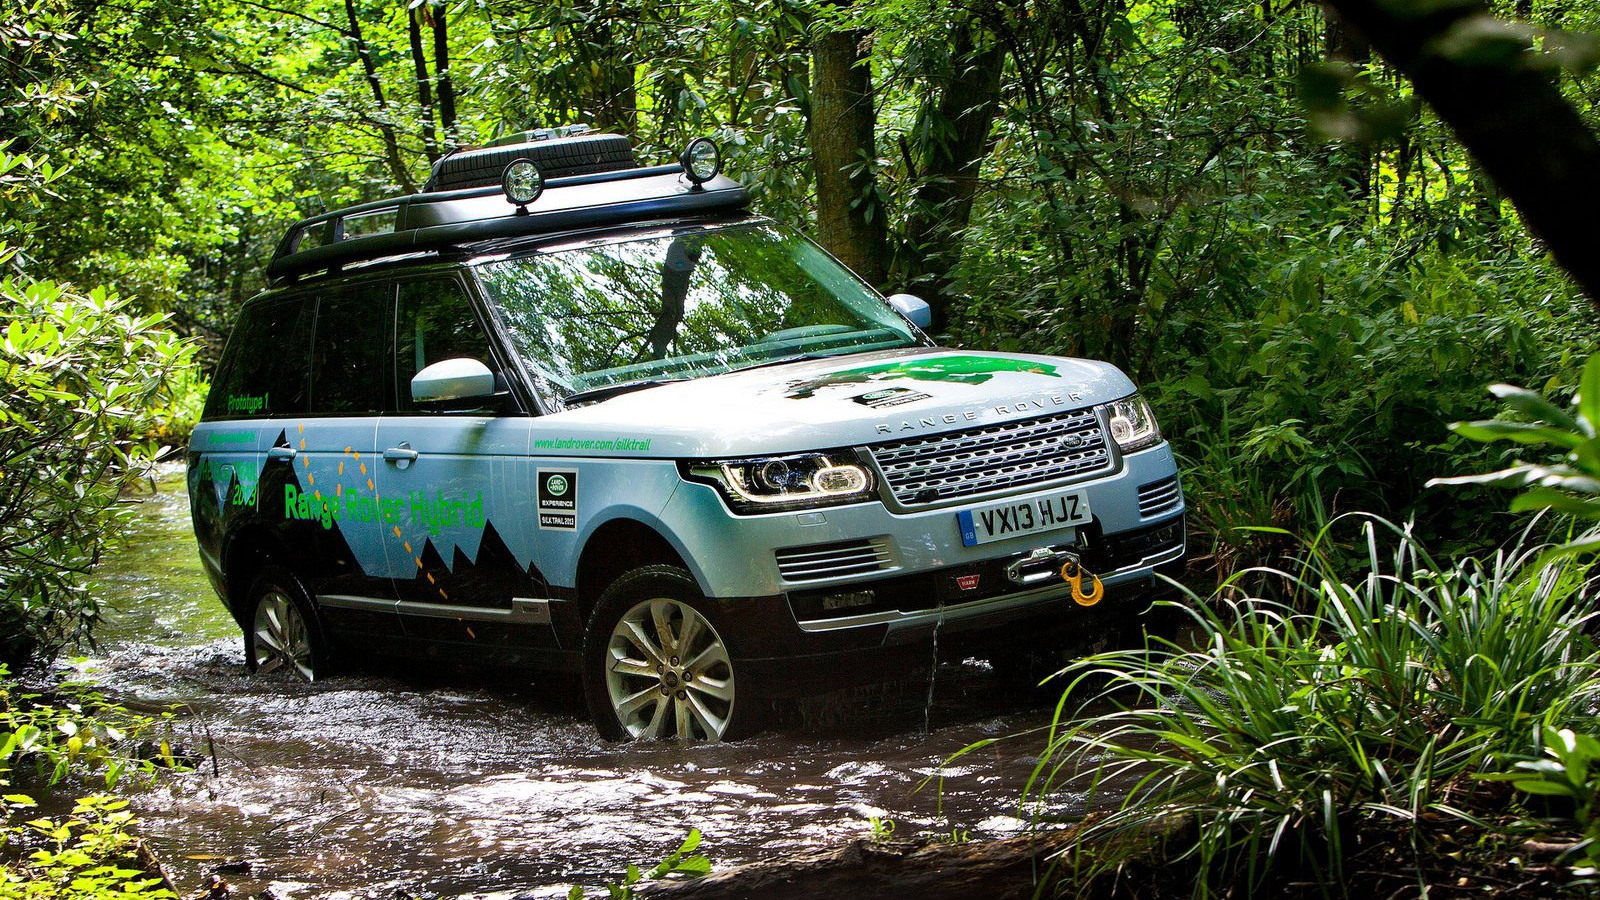 2015 Land Rover Range Rover Hybrid (European spec)